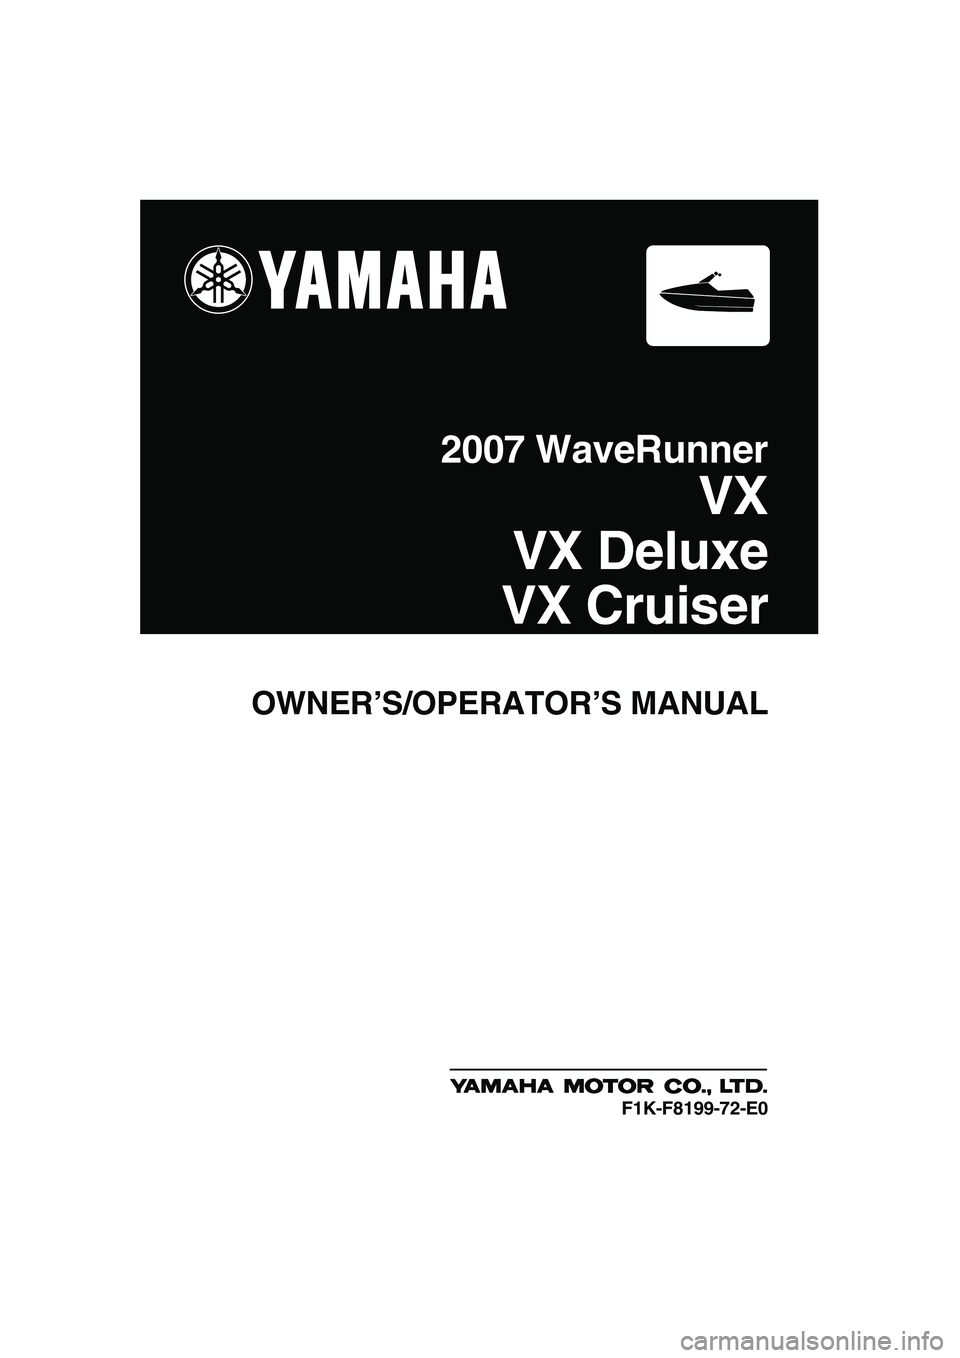 YAMAHA VX 2007  Owners Manual OWNER’S/OPERATOR’S MANUAL
2007 WaveRunner
VX
VX Deluxe
VX Cruiser
F1K-F8199-72-E0
UF1K72E0.book  Page 1  Wednesday, August 2, 2006  10:43 AM 